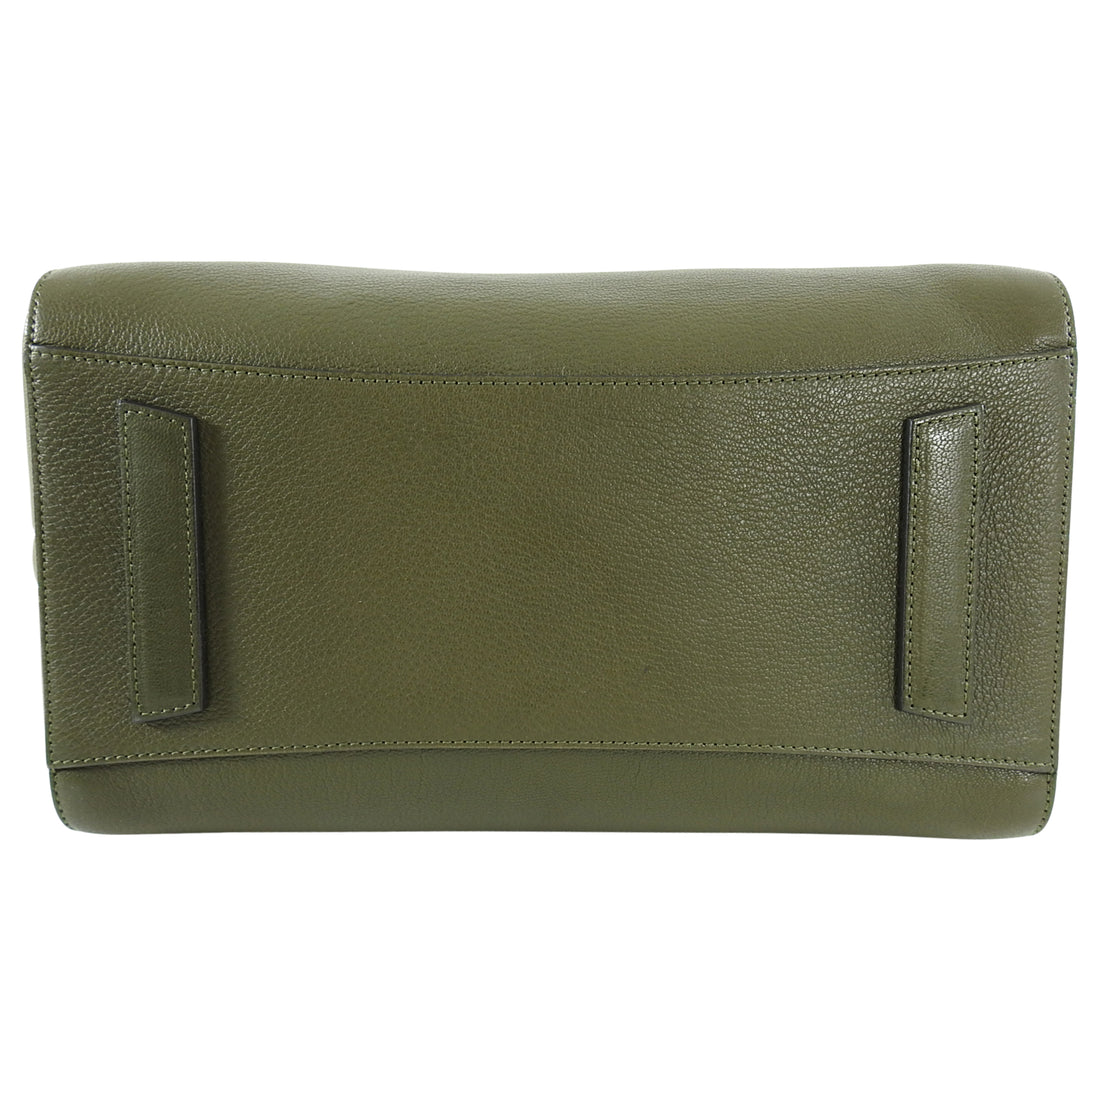 Givenchy Tricolor Olive Green Antigona Medium Bag